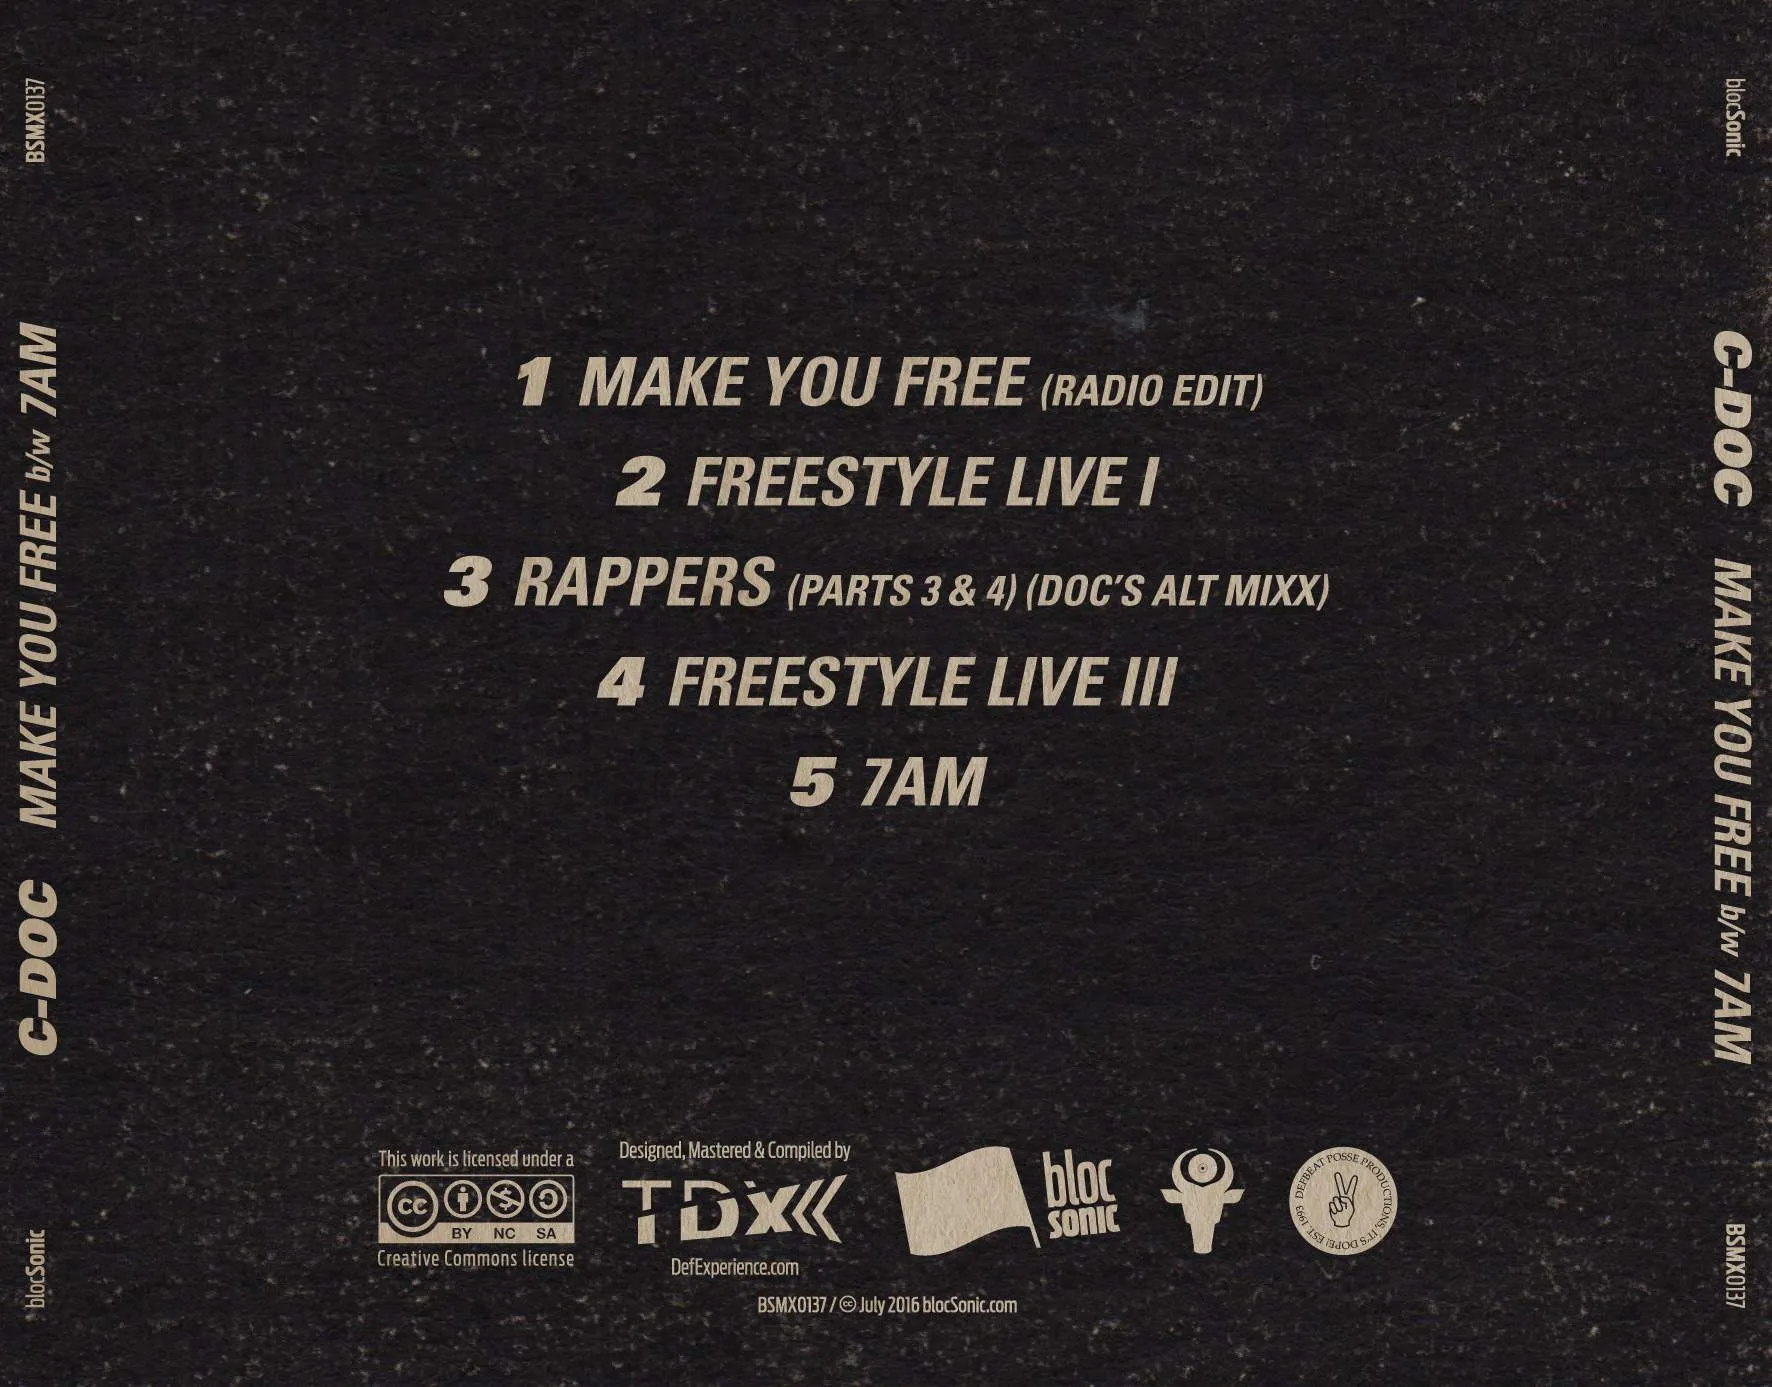 Album traycard for “Make You Free b/w 7am” by C-Doc